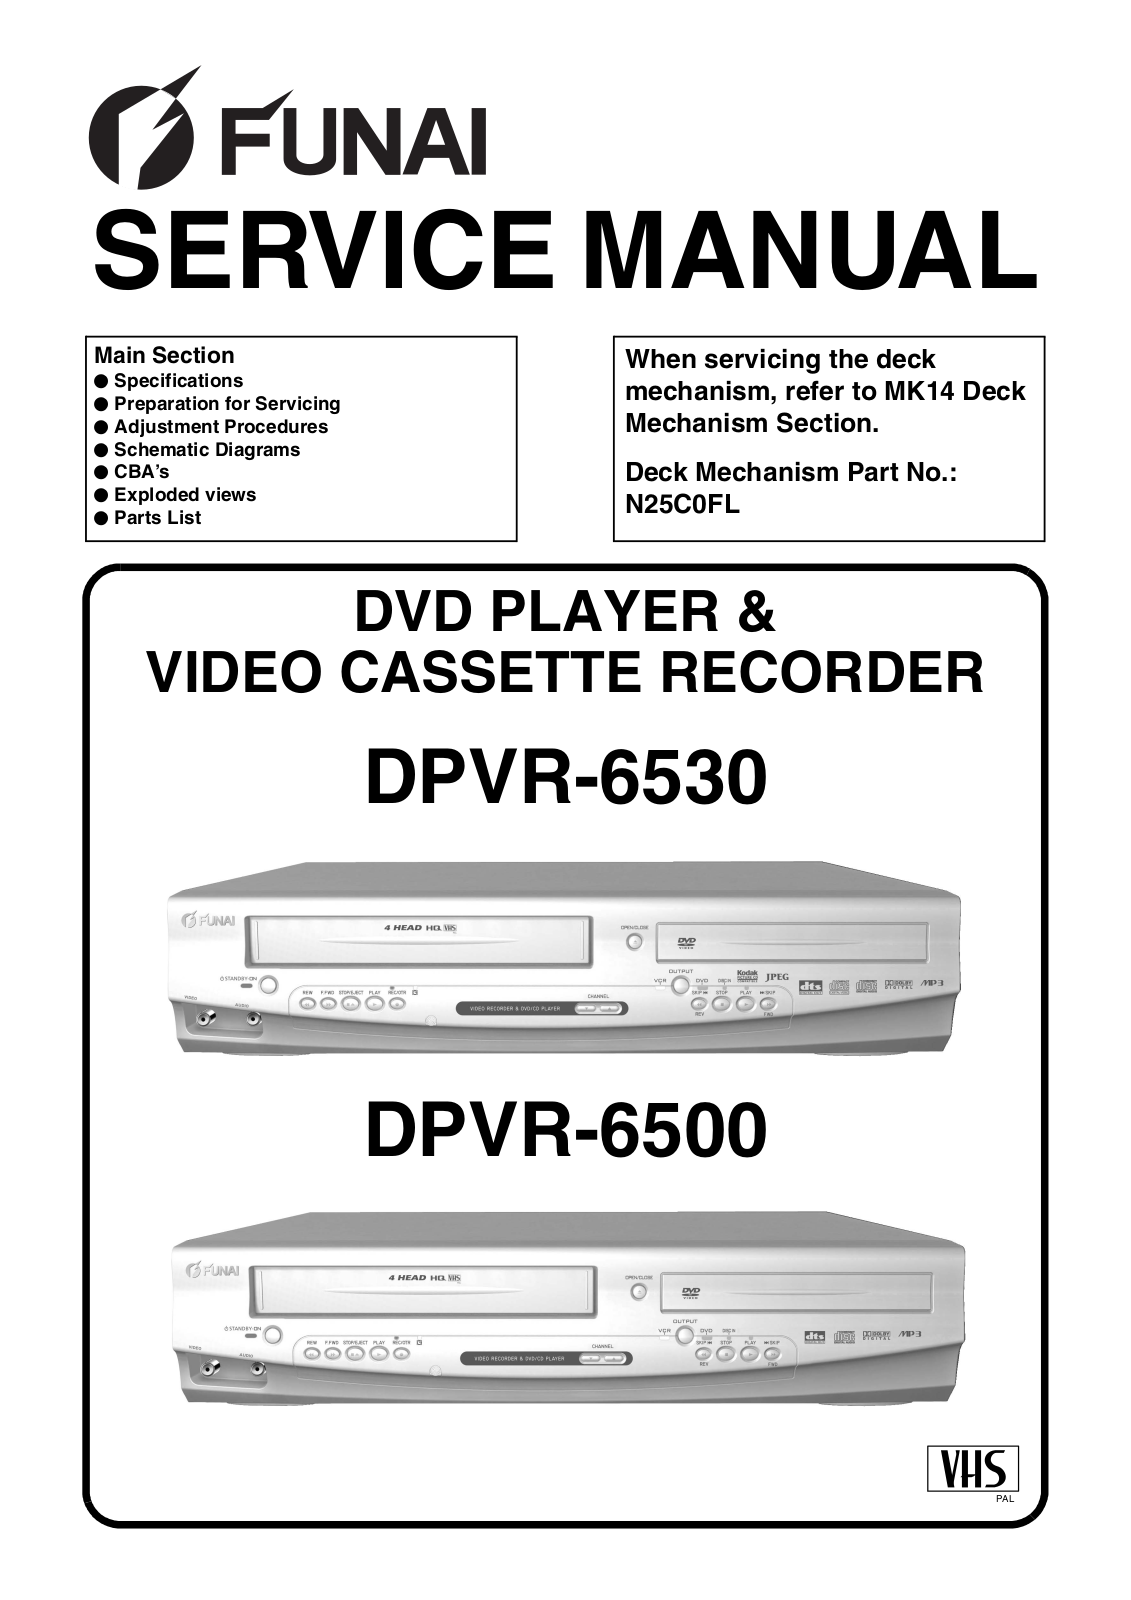 Funai DPVR-6500 Service manual